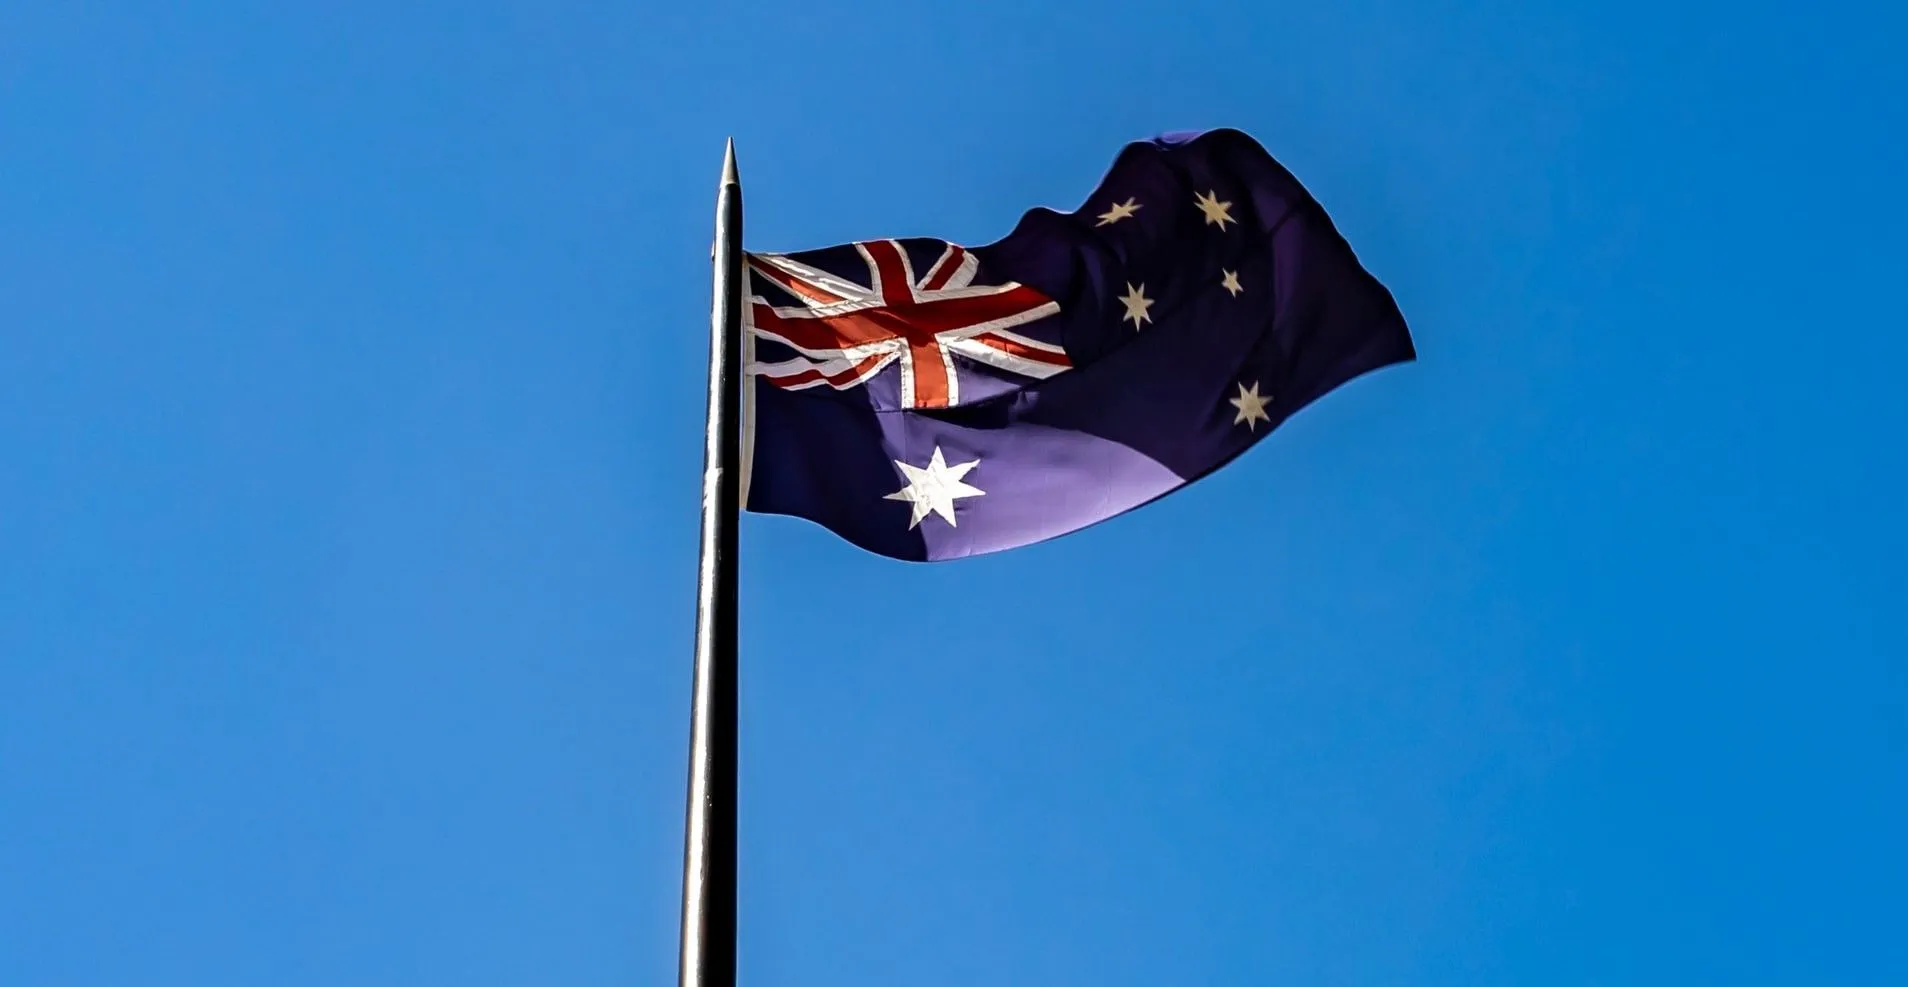 Australian flag waving in the sky